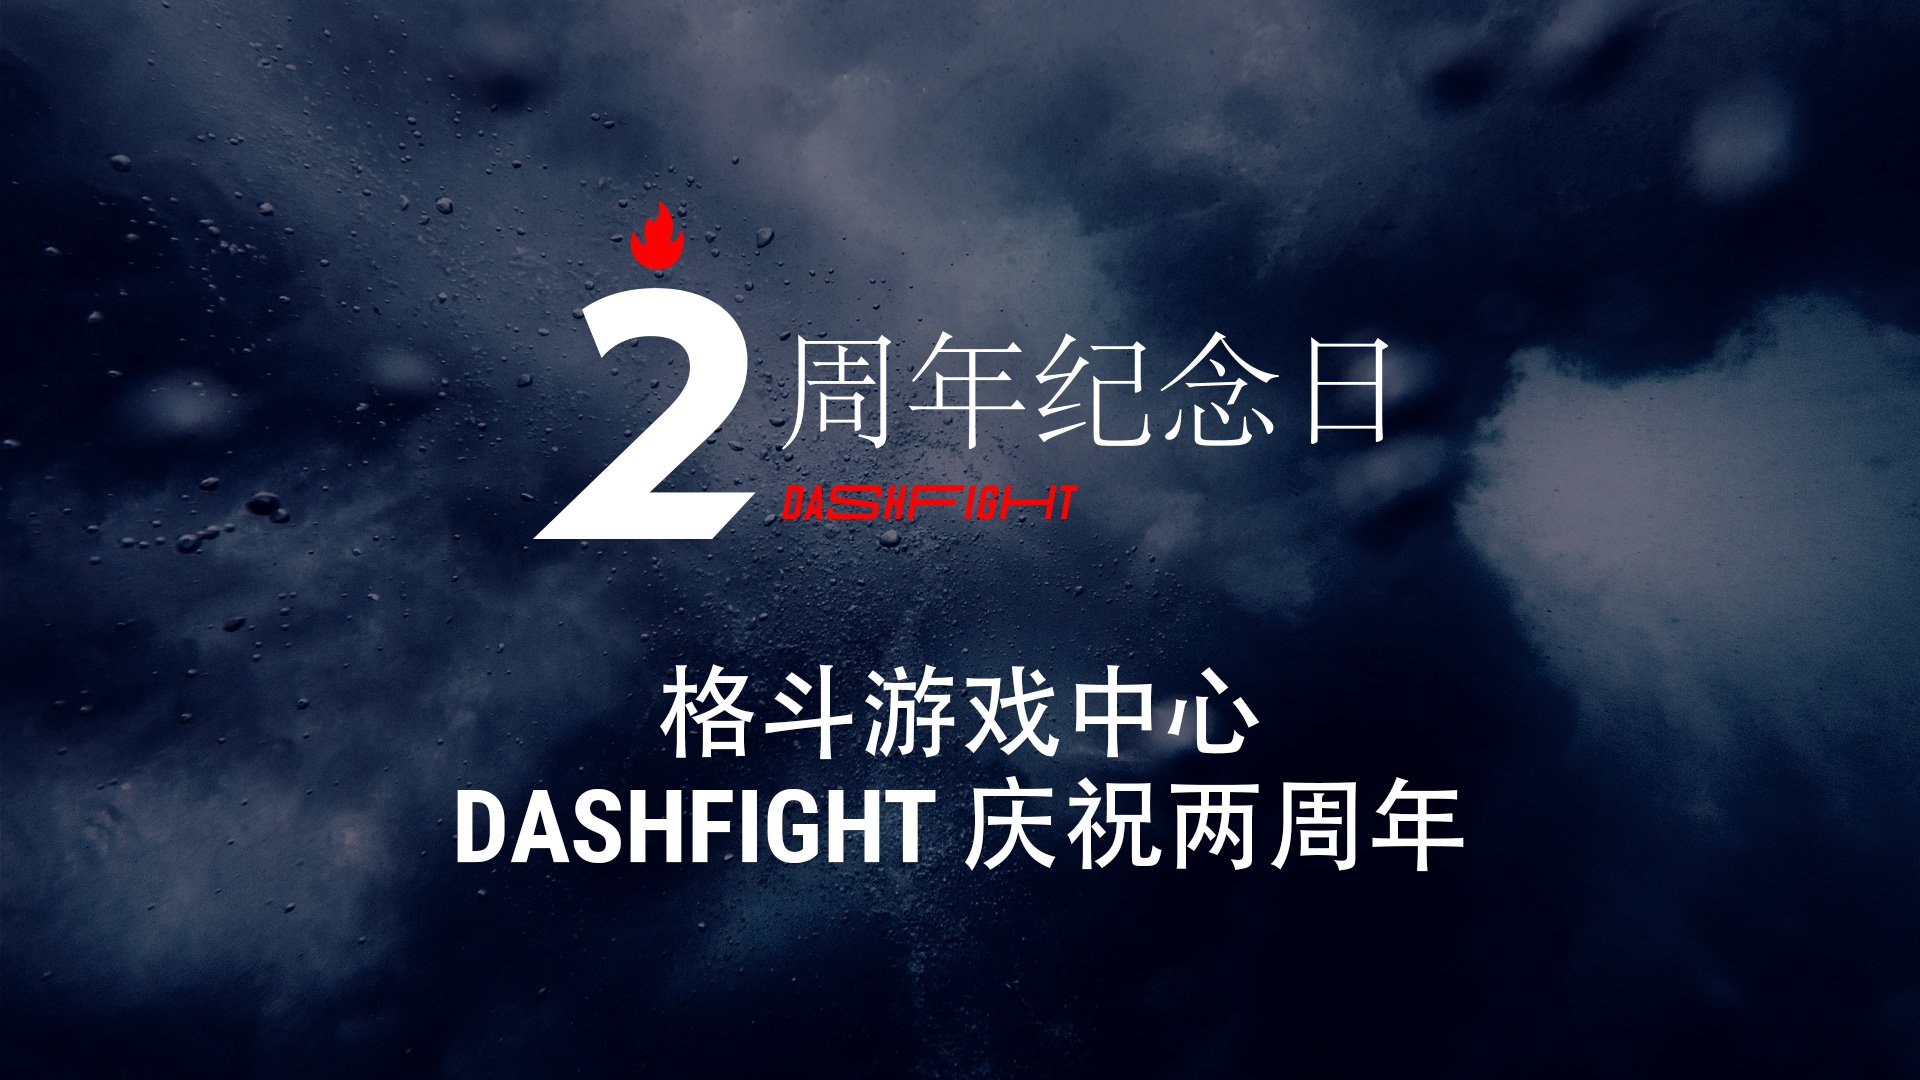 格斗游戏中心 DashFight 庆祝两周年。图像： DashFight